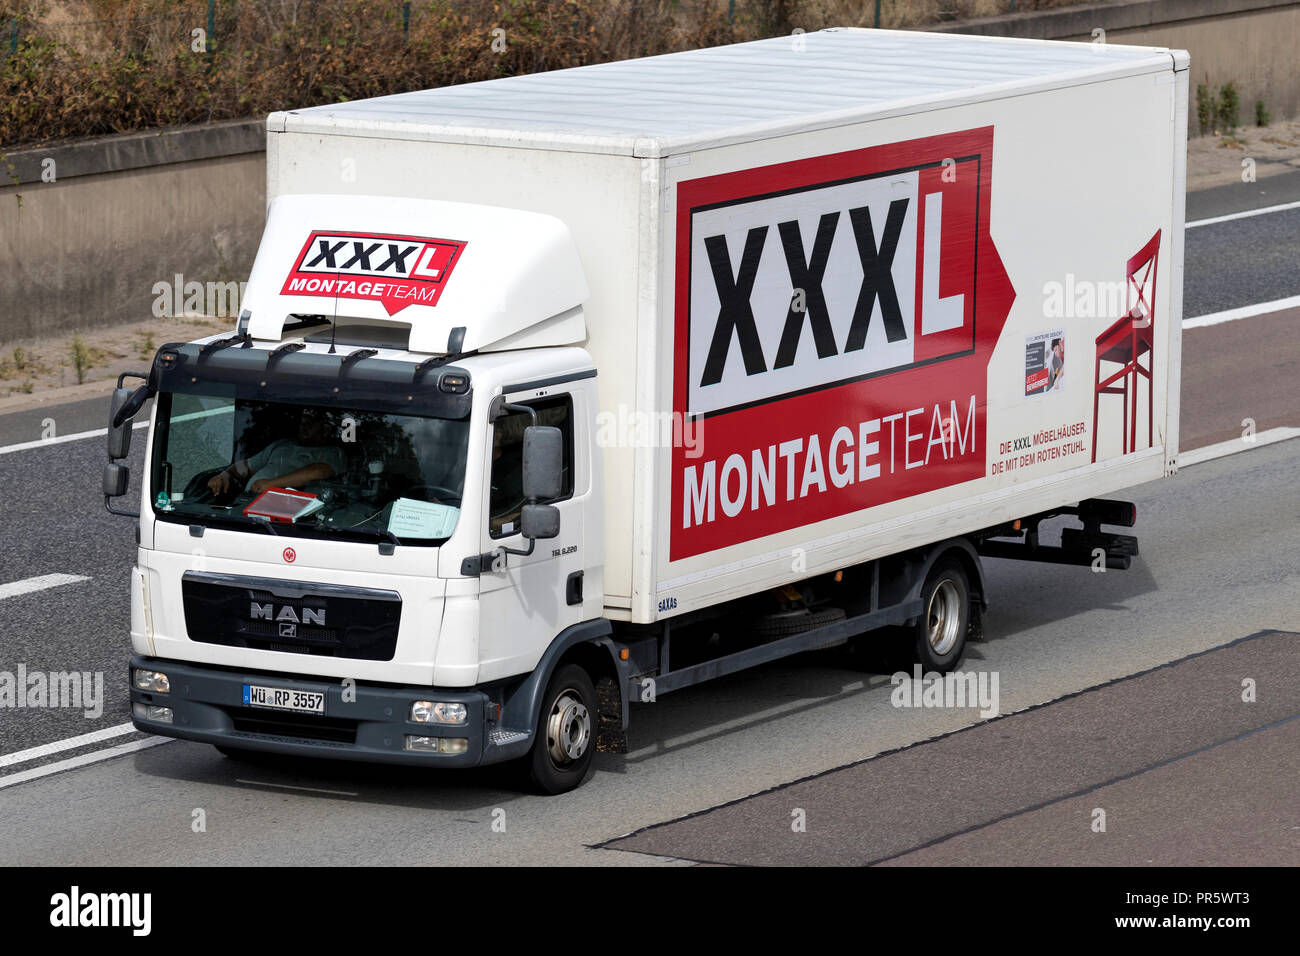 XXXL truck on motorway. Austria based XXXLutz is the second largest furniture retailer in the world. Stock Photo